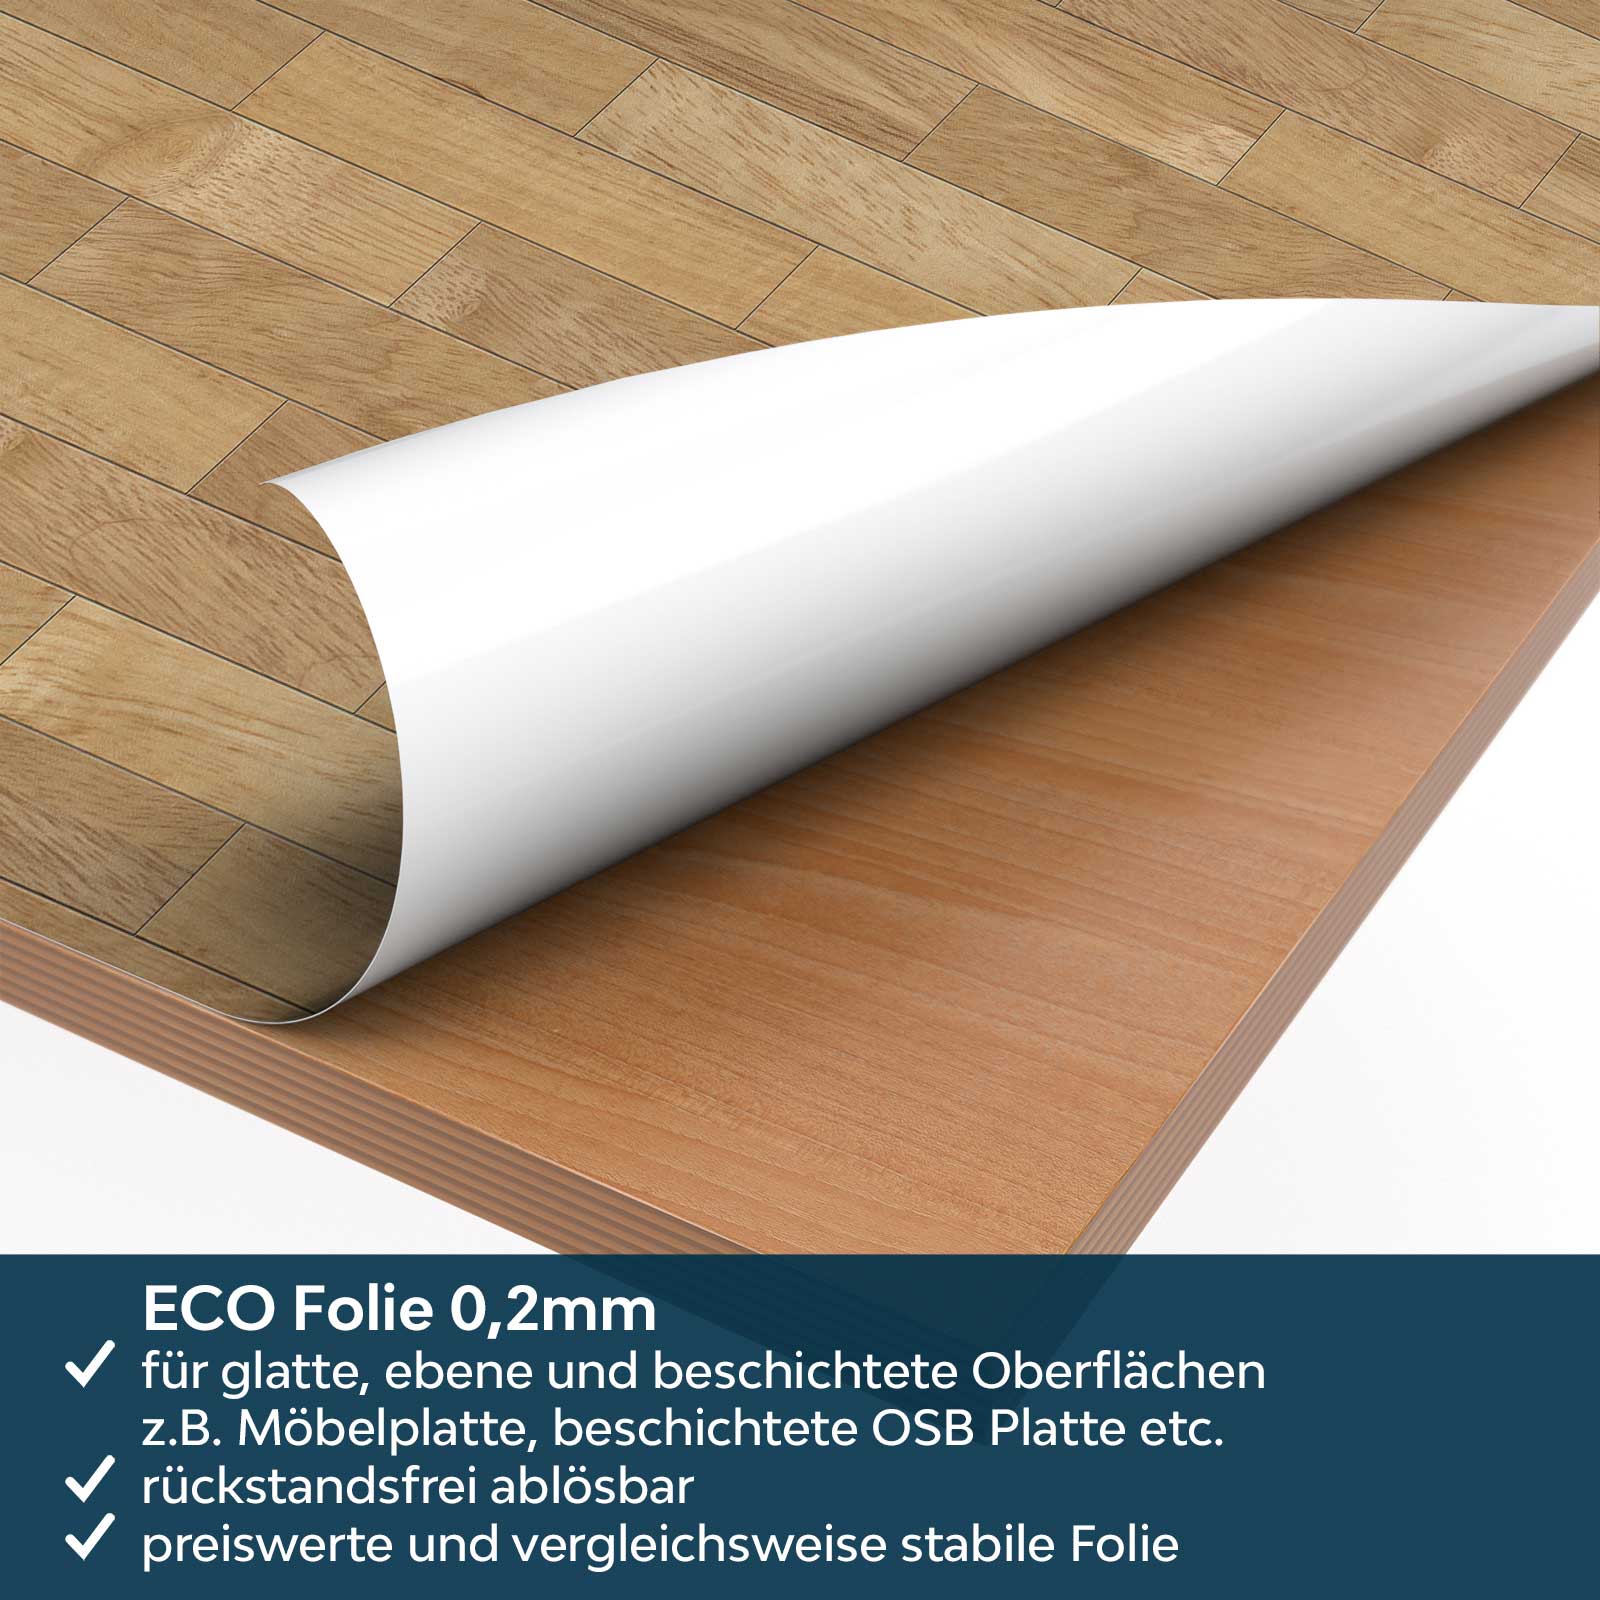 https://www.folien21.de/images/product_images/original_images/kuechenrueckwand-folie/holzoptik/007/kuechenrueckwand-folie-selbstklebend-eichenholz-material-eco.jpg